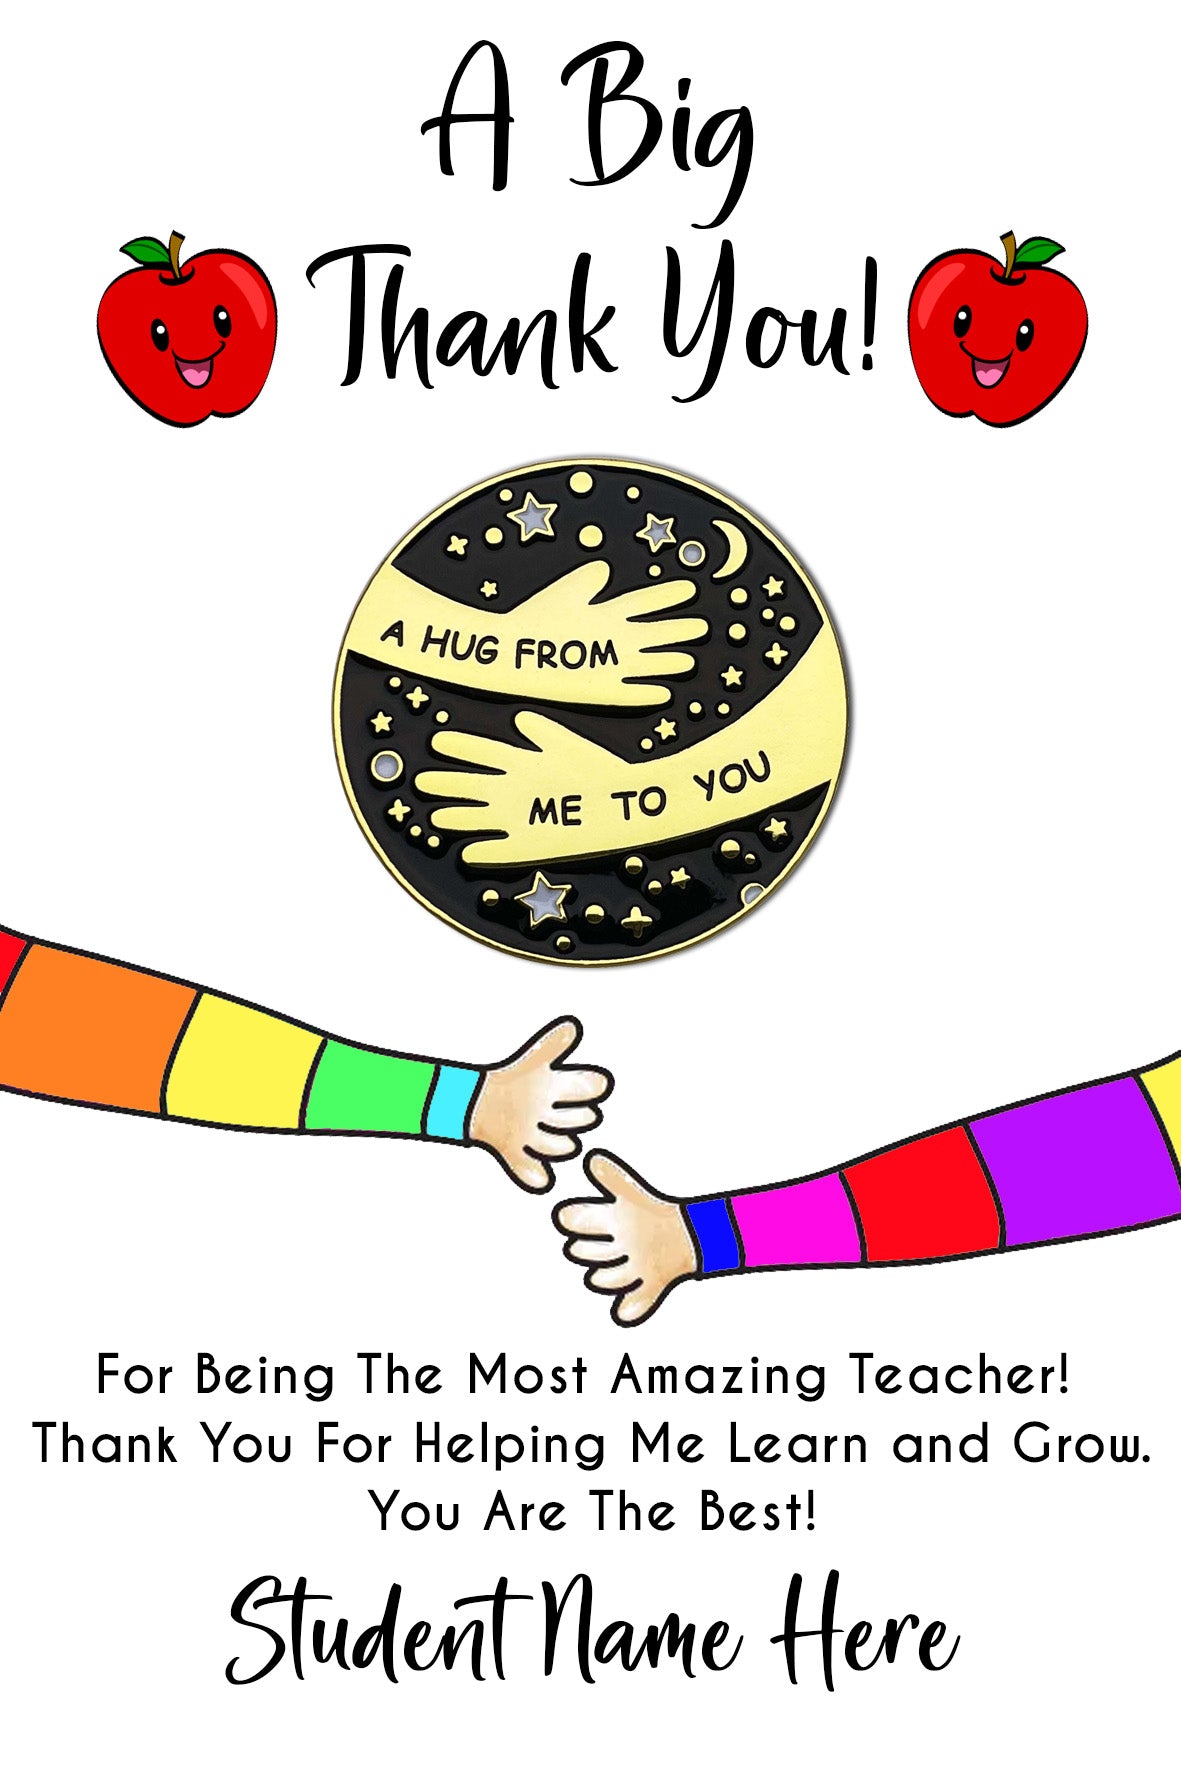 Thank You Teacher Pocket Hug Pin Badges & Message Cards